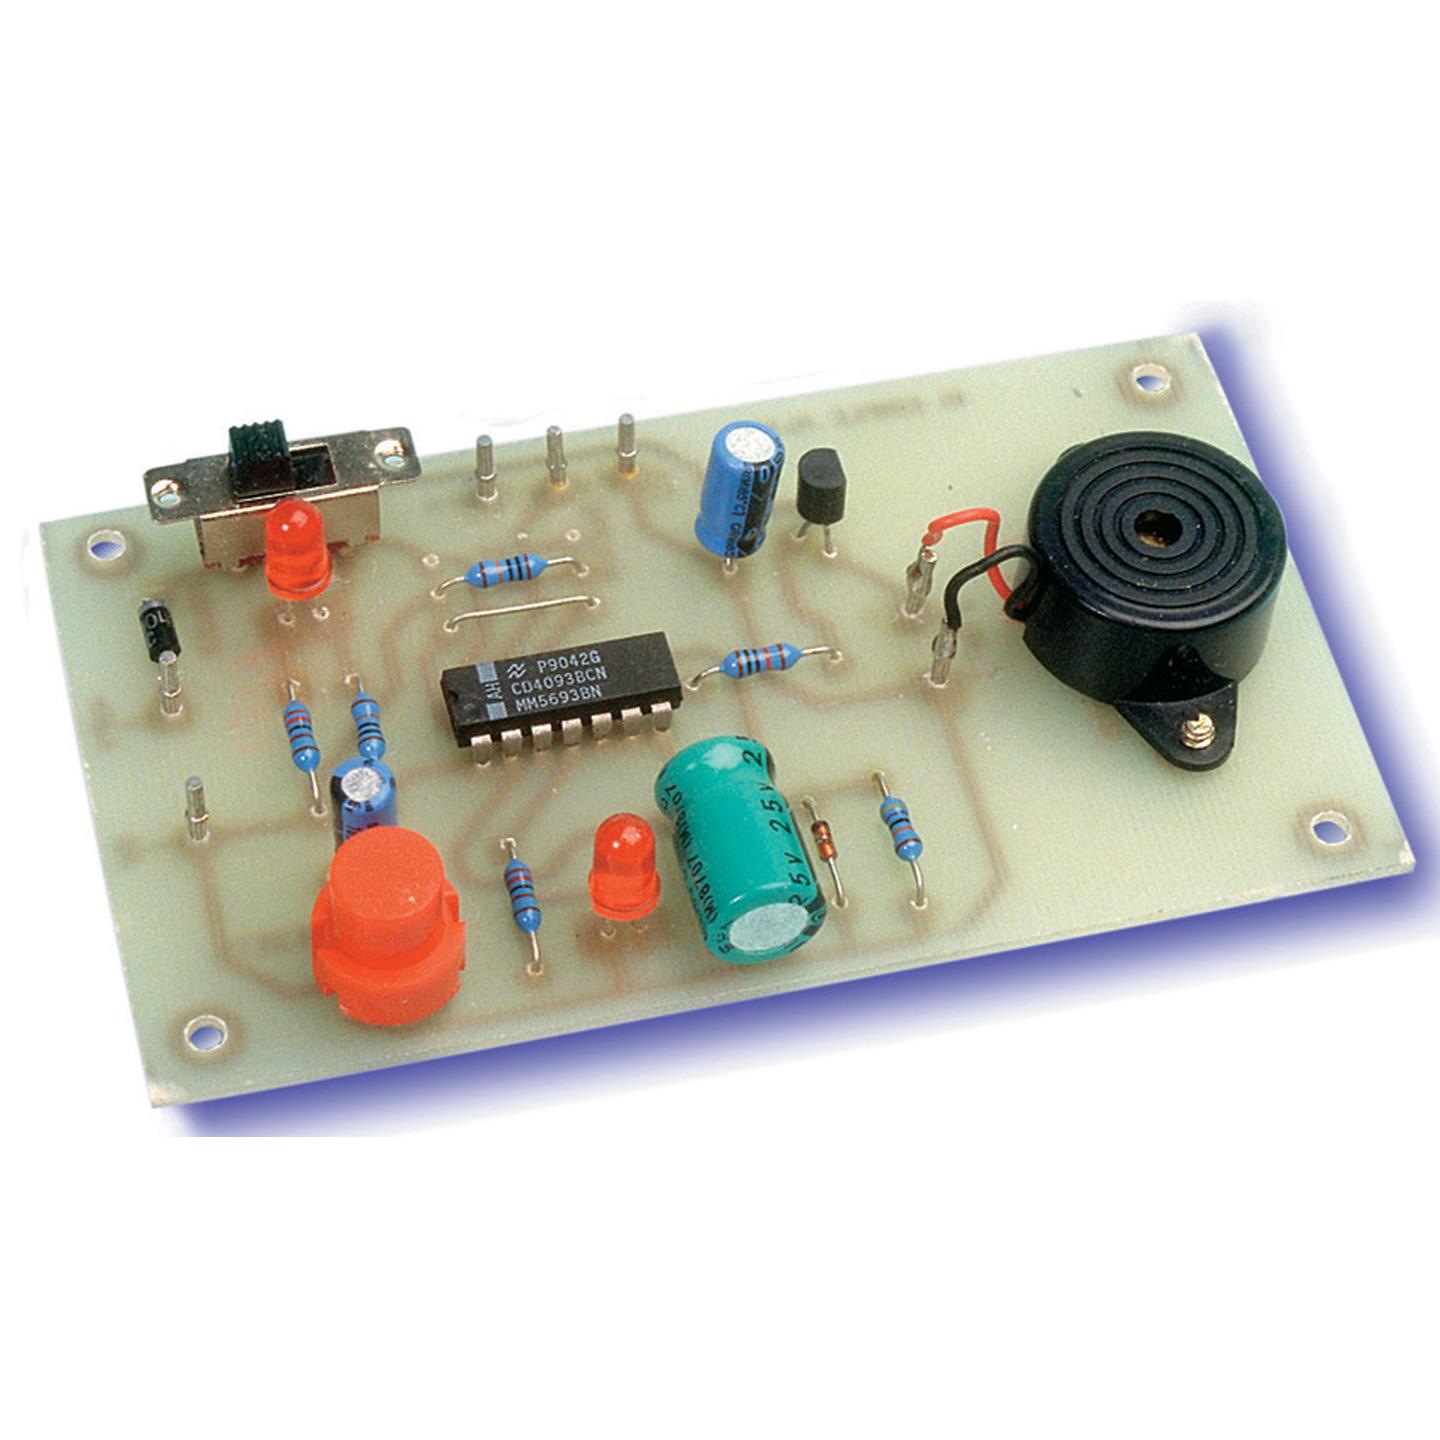 Short Circuits Three Project - Simple Intruder Alarm